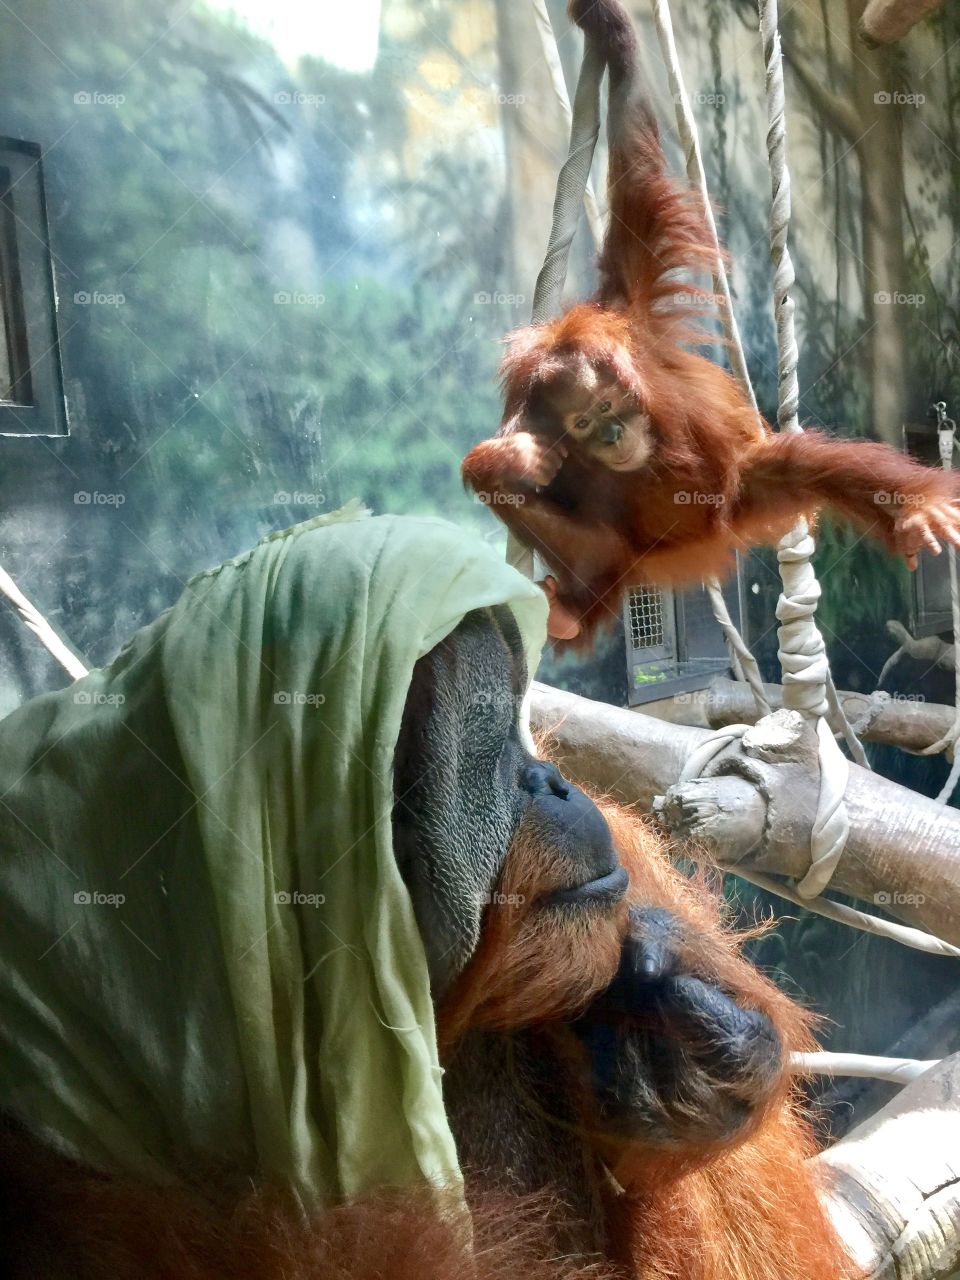 Momma & baby orangutans